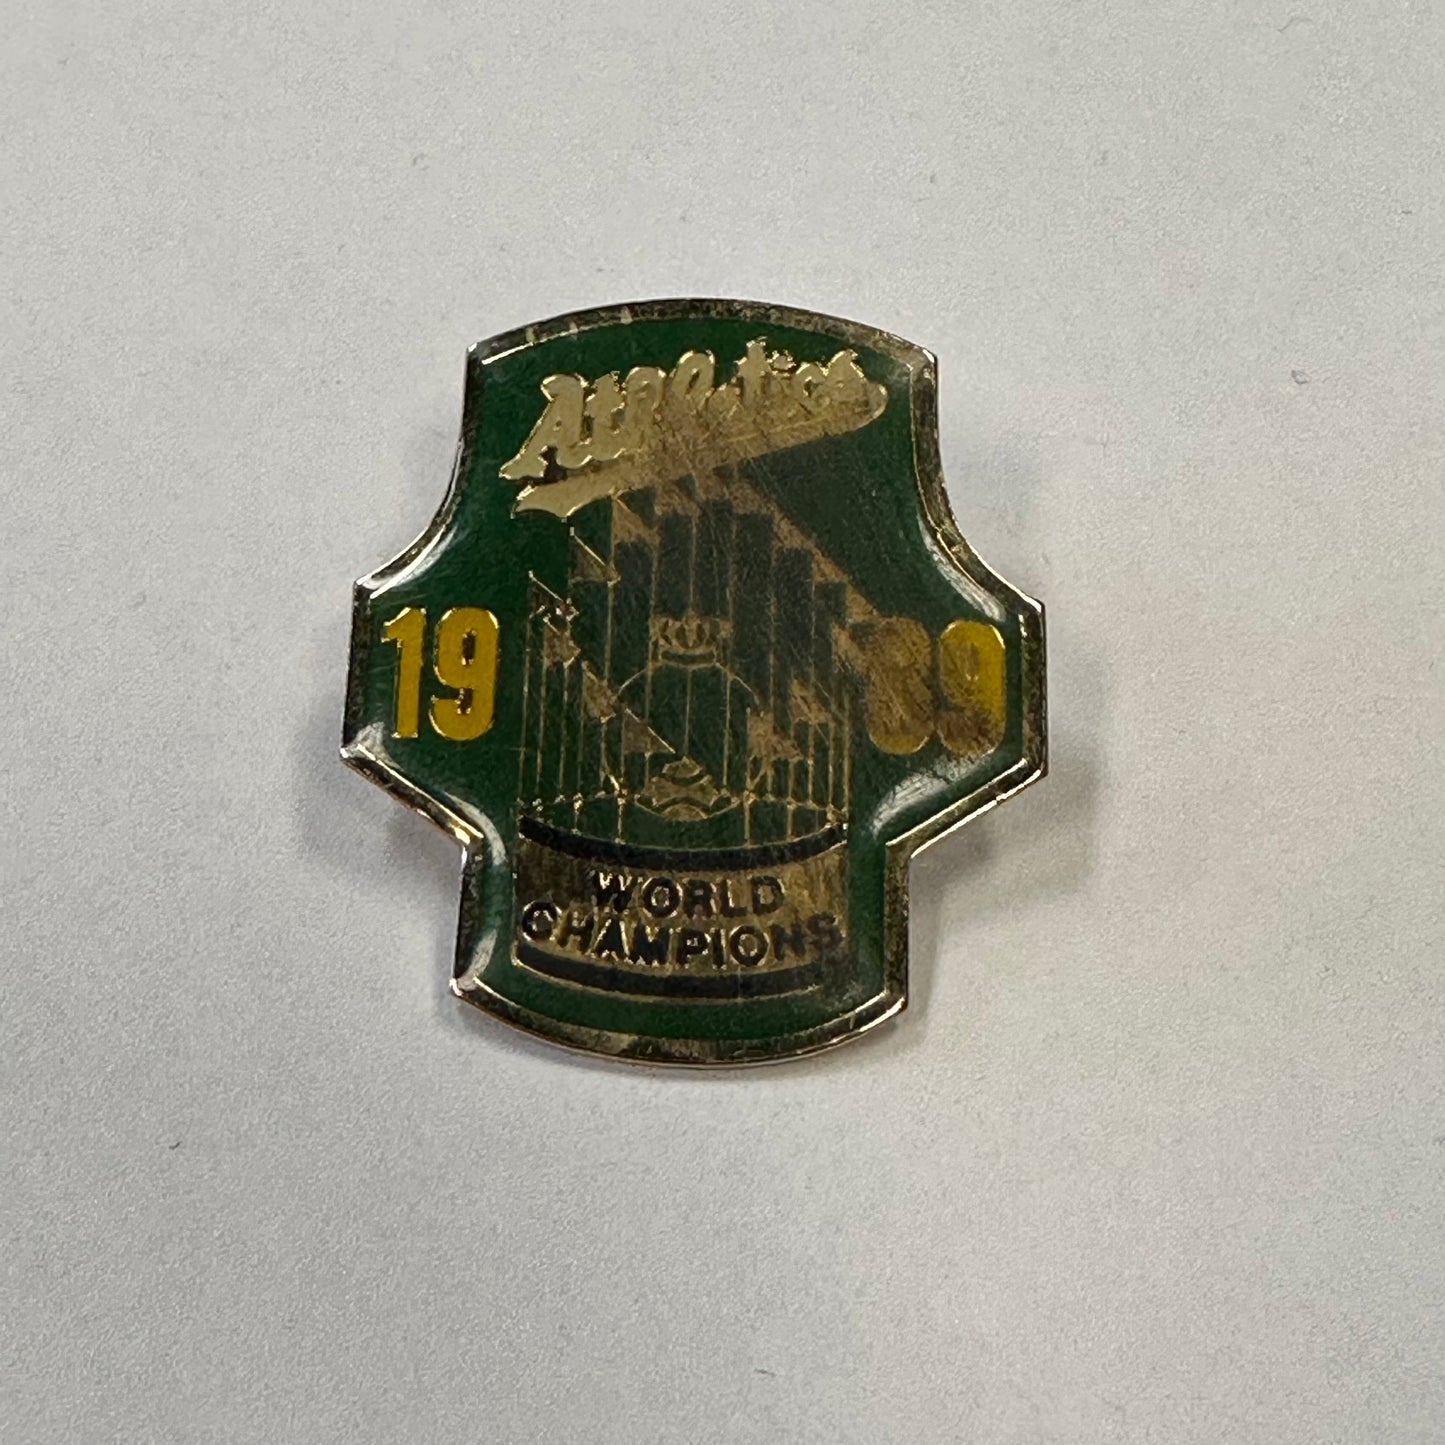 1989 Athletics pin